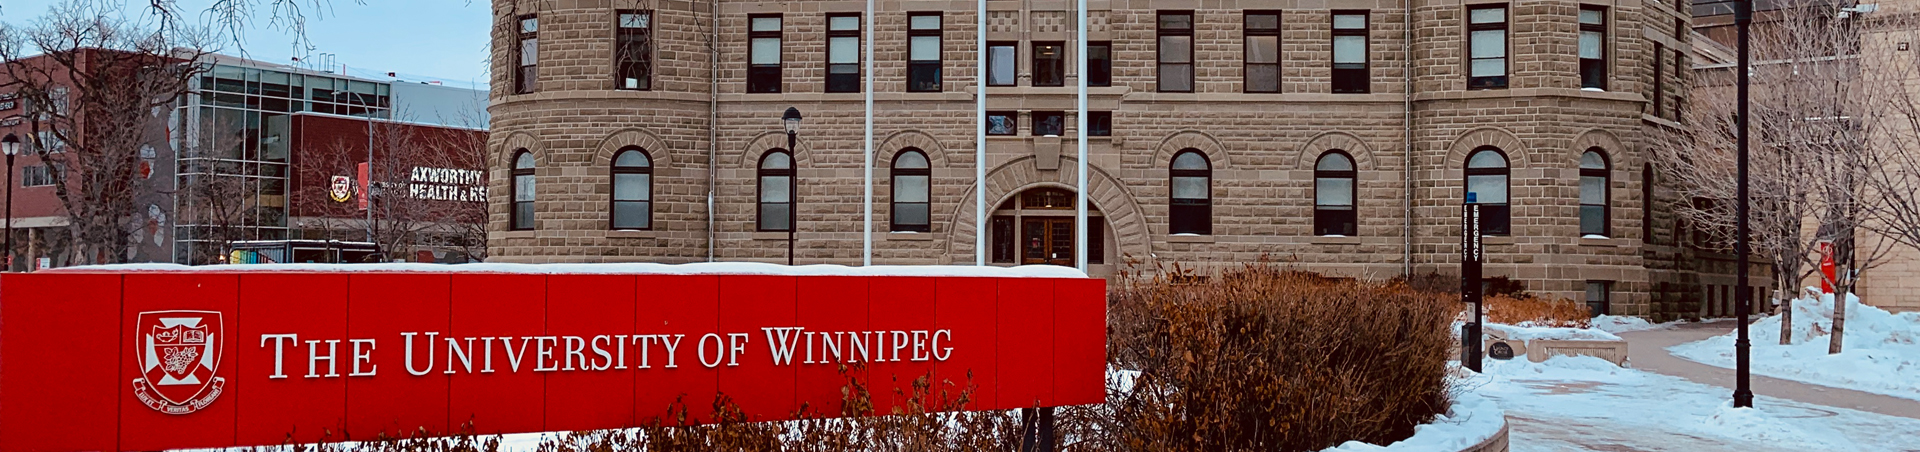 University of Winnipeg Campus